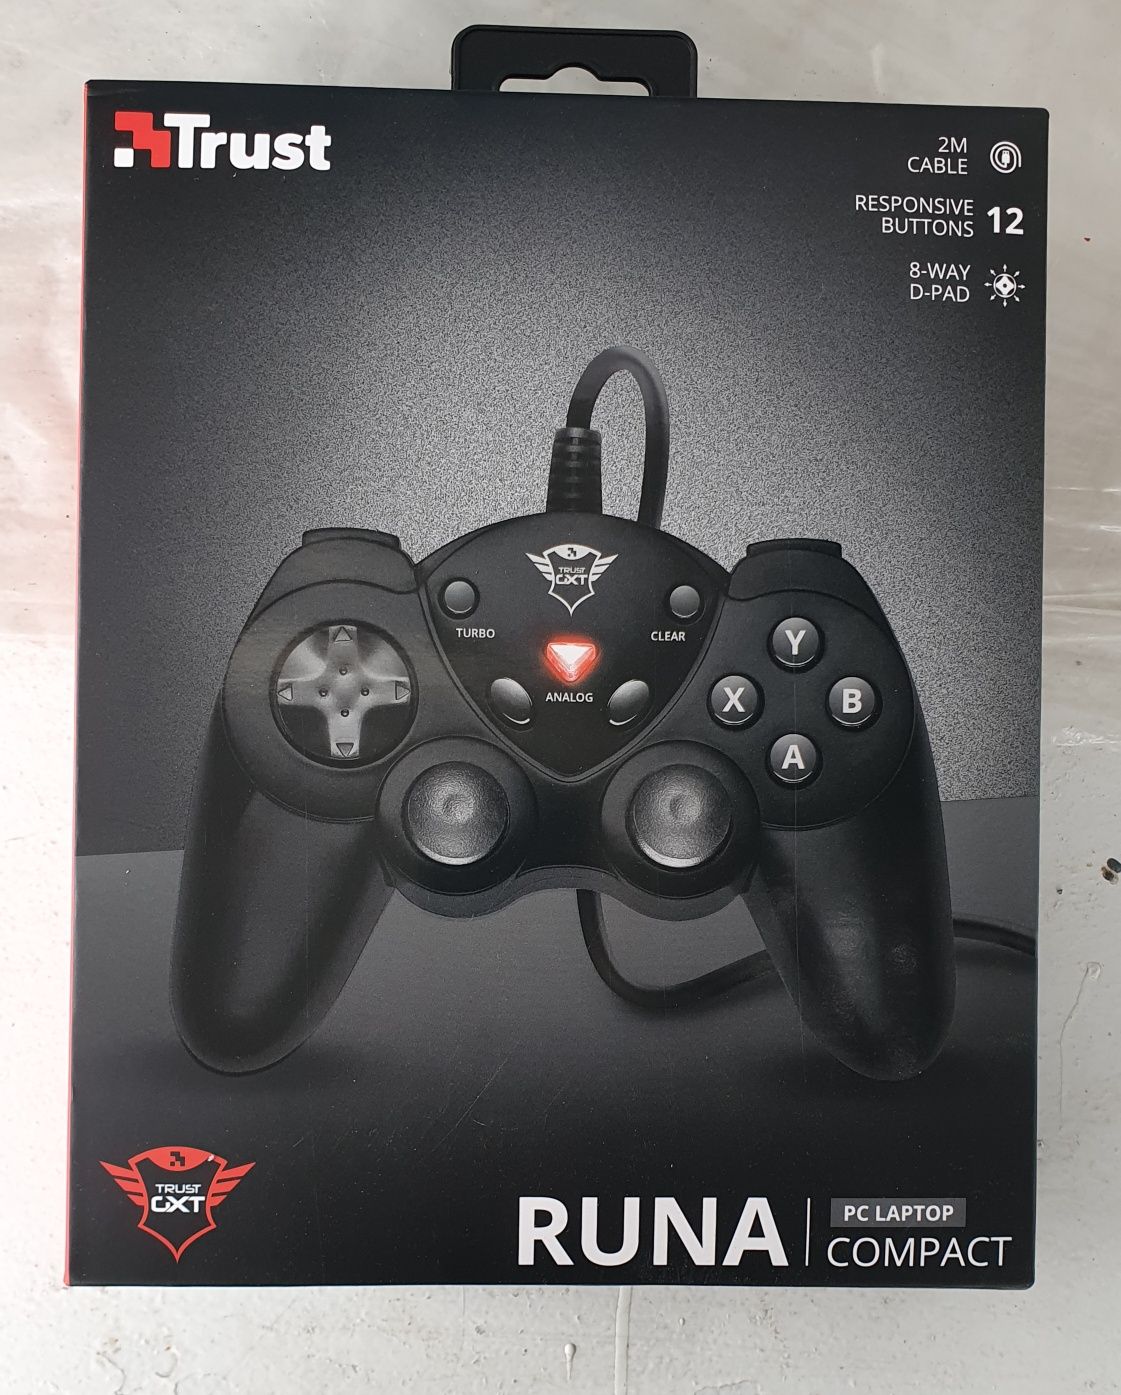 Геймпад Trust GXT 24 Runa Compact, Black, USB, для PC